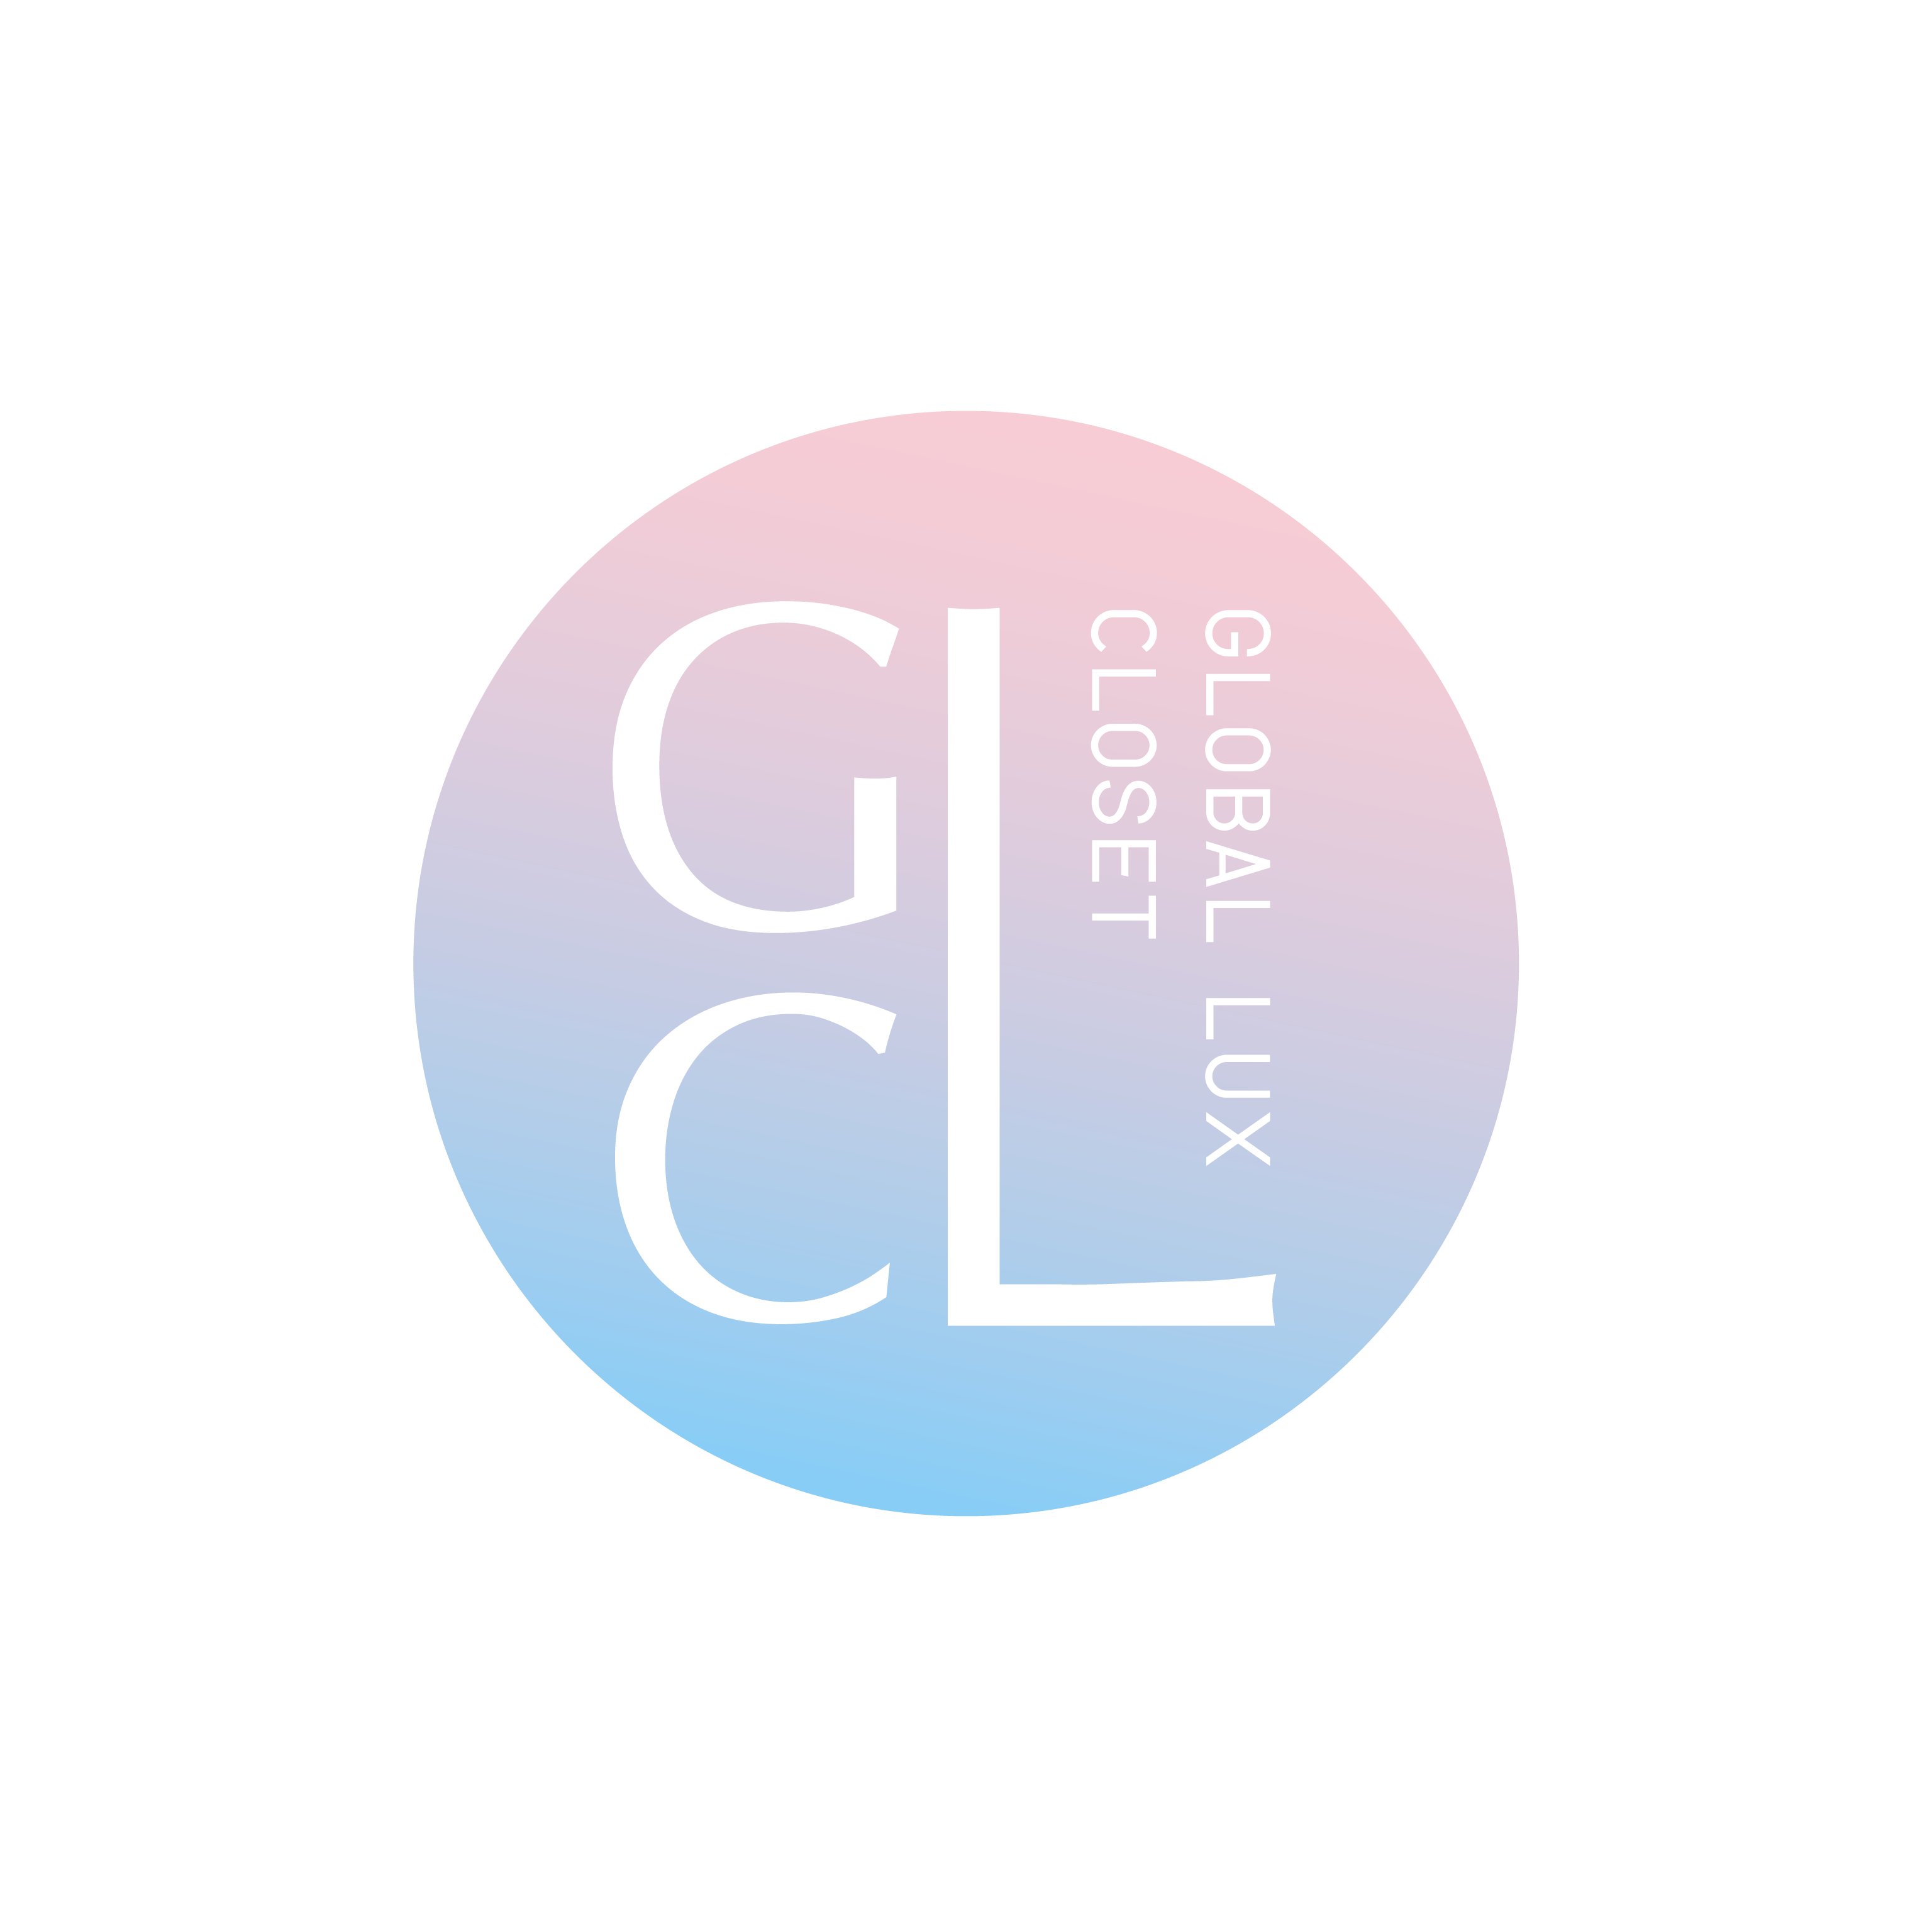 The Luxury Closet  The Global Gift Gala